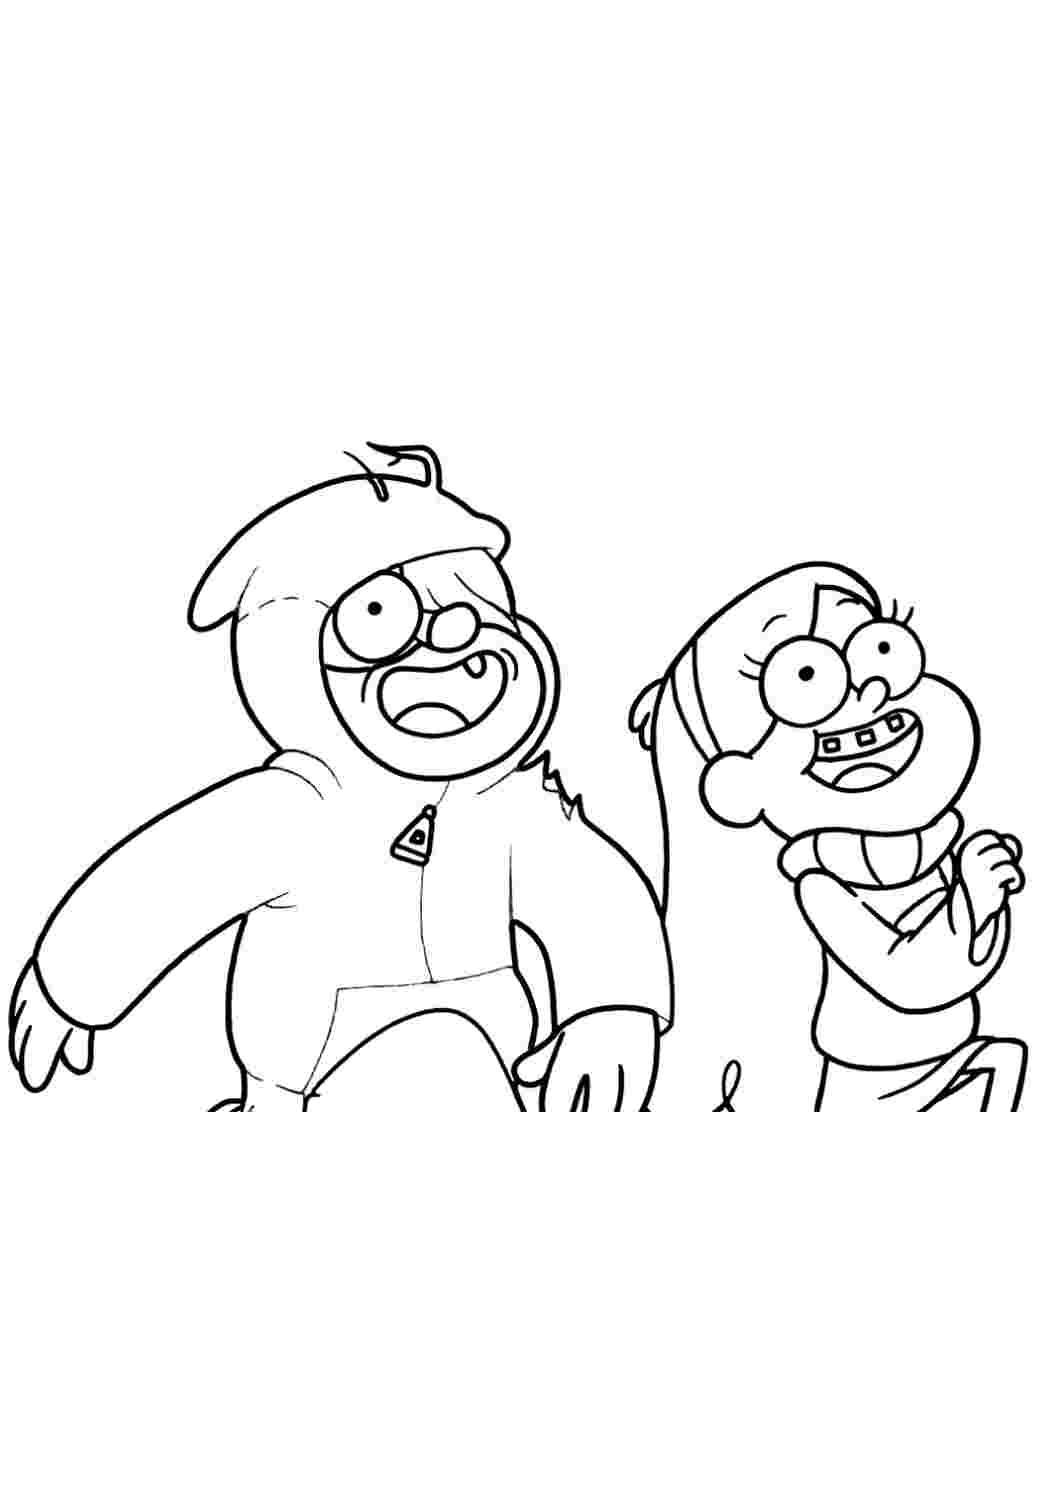 Раскраски Гравити Фолз (Gravity Falls free coloring pages) скачать